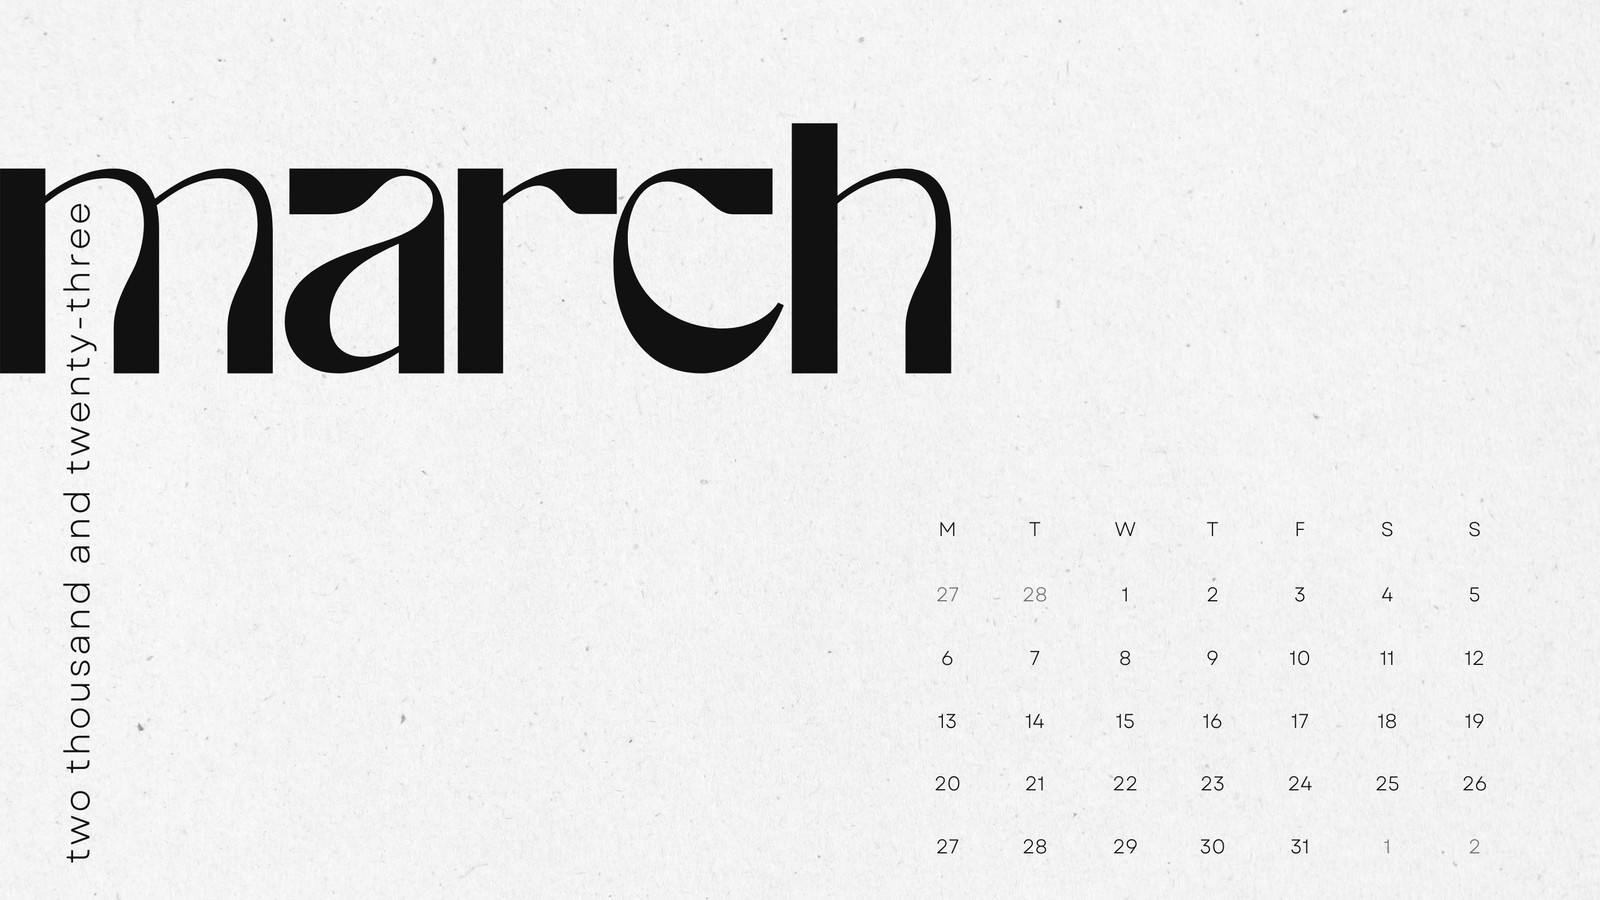 March 2023 Calendar Wallpaper  Wallpapers from TheHolidaySpot